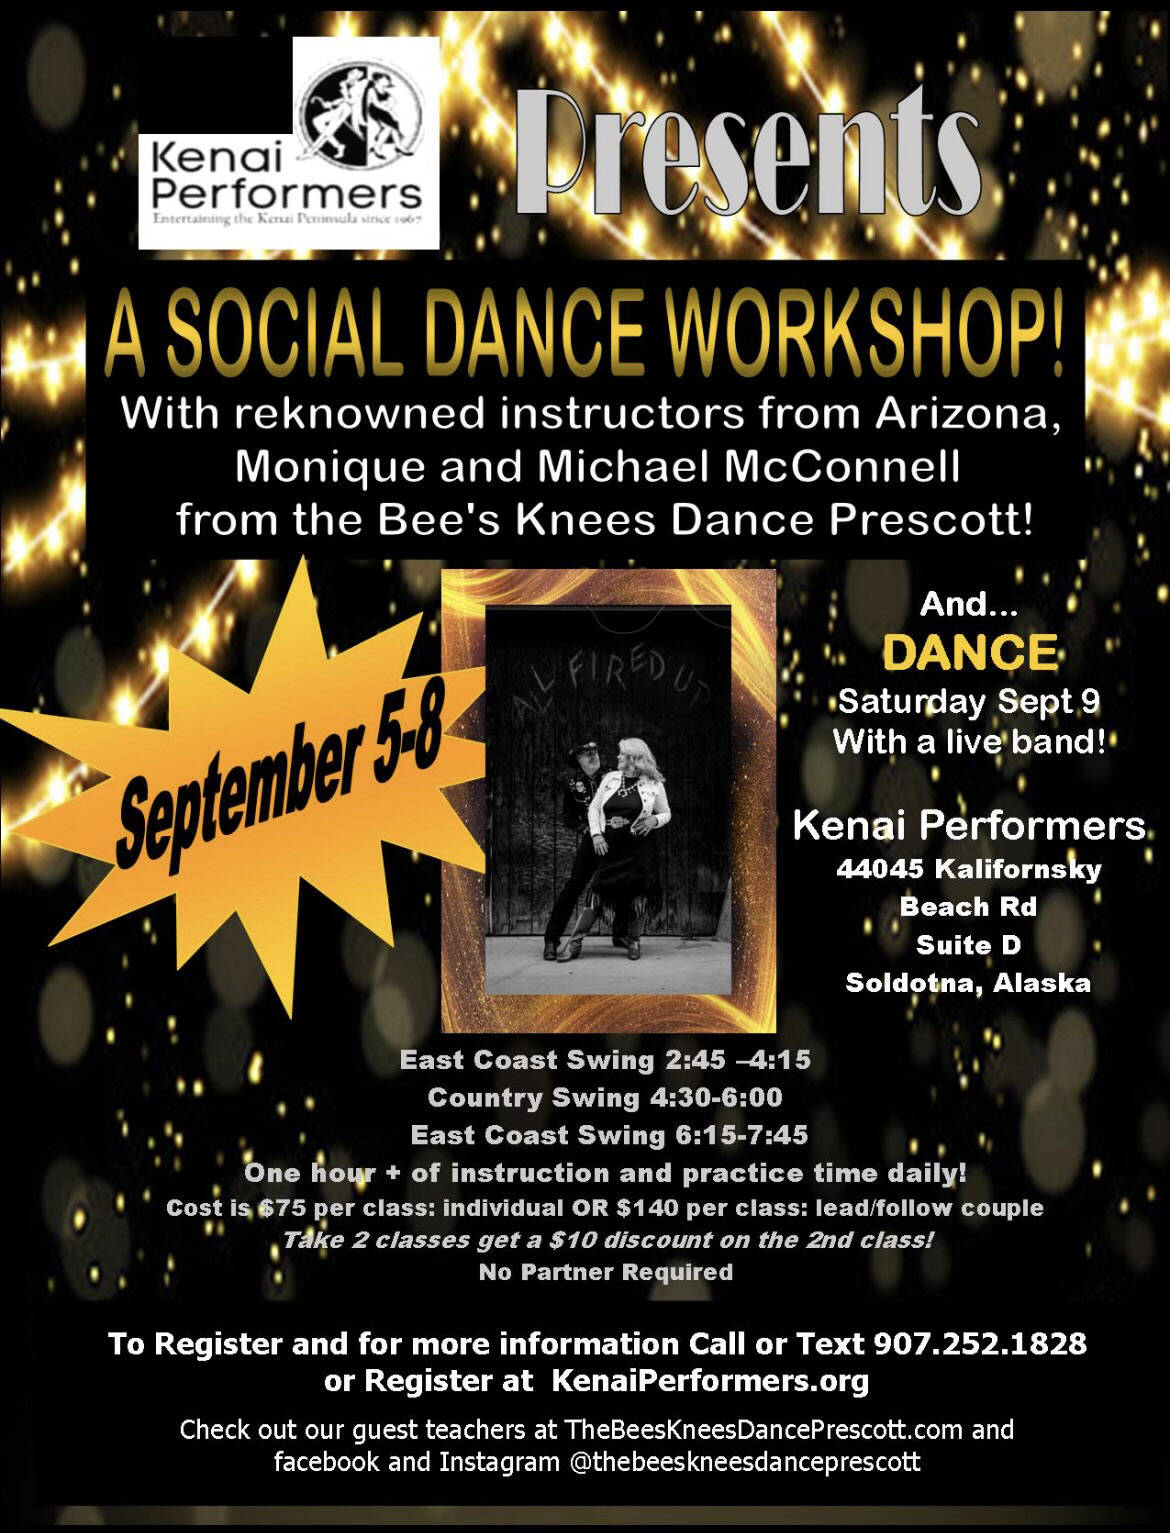 Promotional poster for Kenai Performers Social Dance Workshop. (Photo courtesy Kenai Performers)